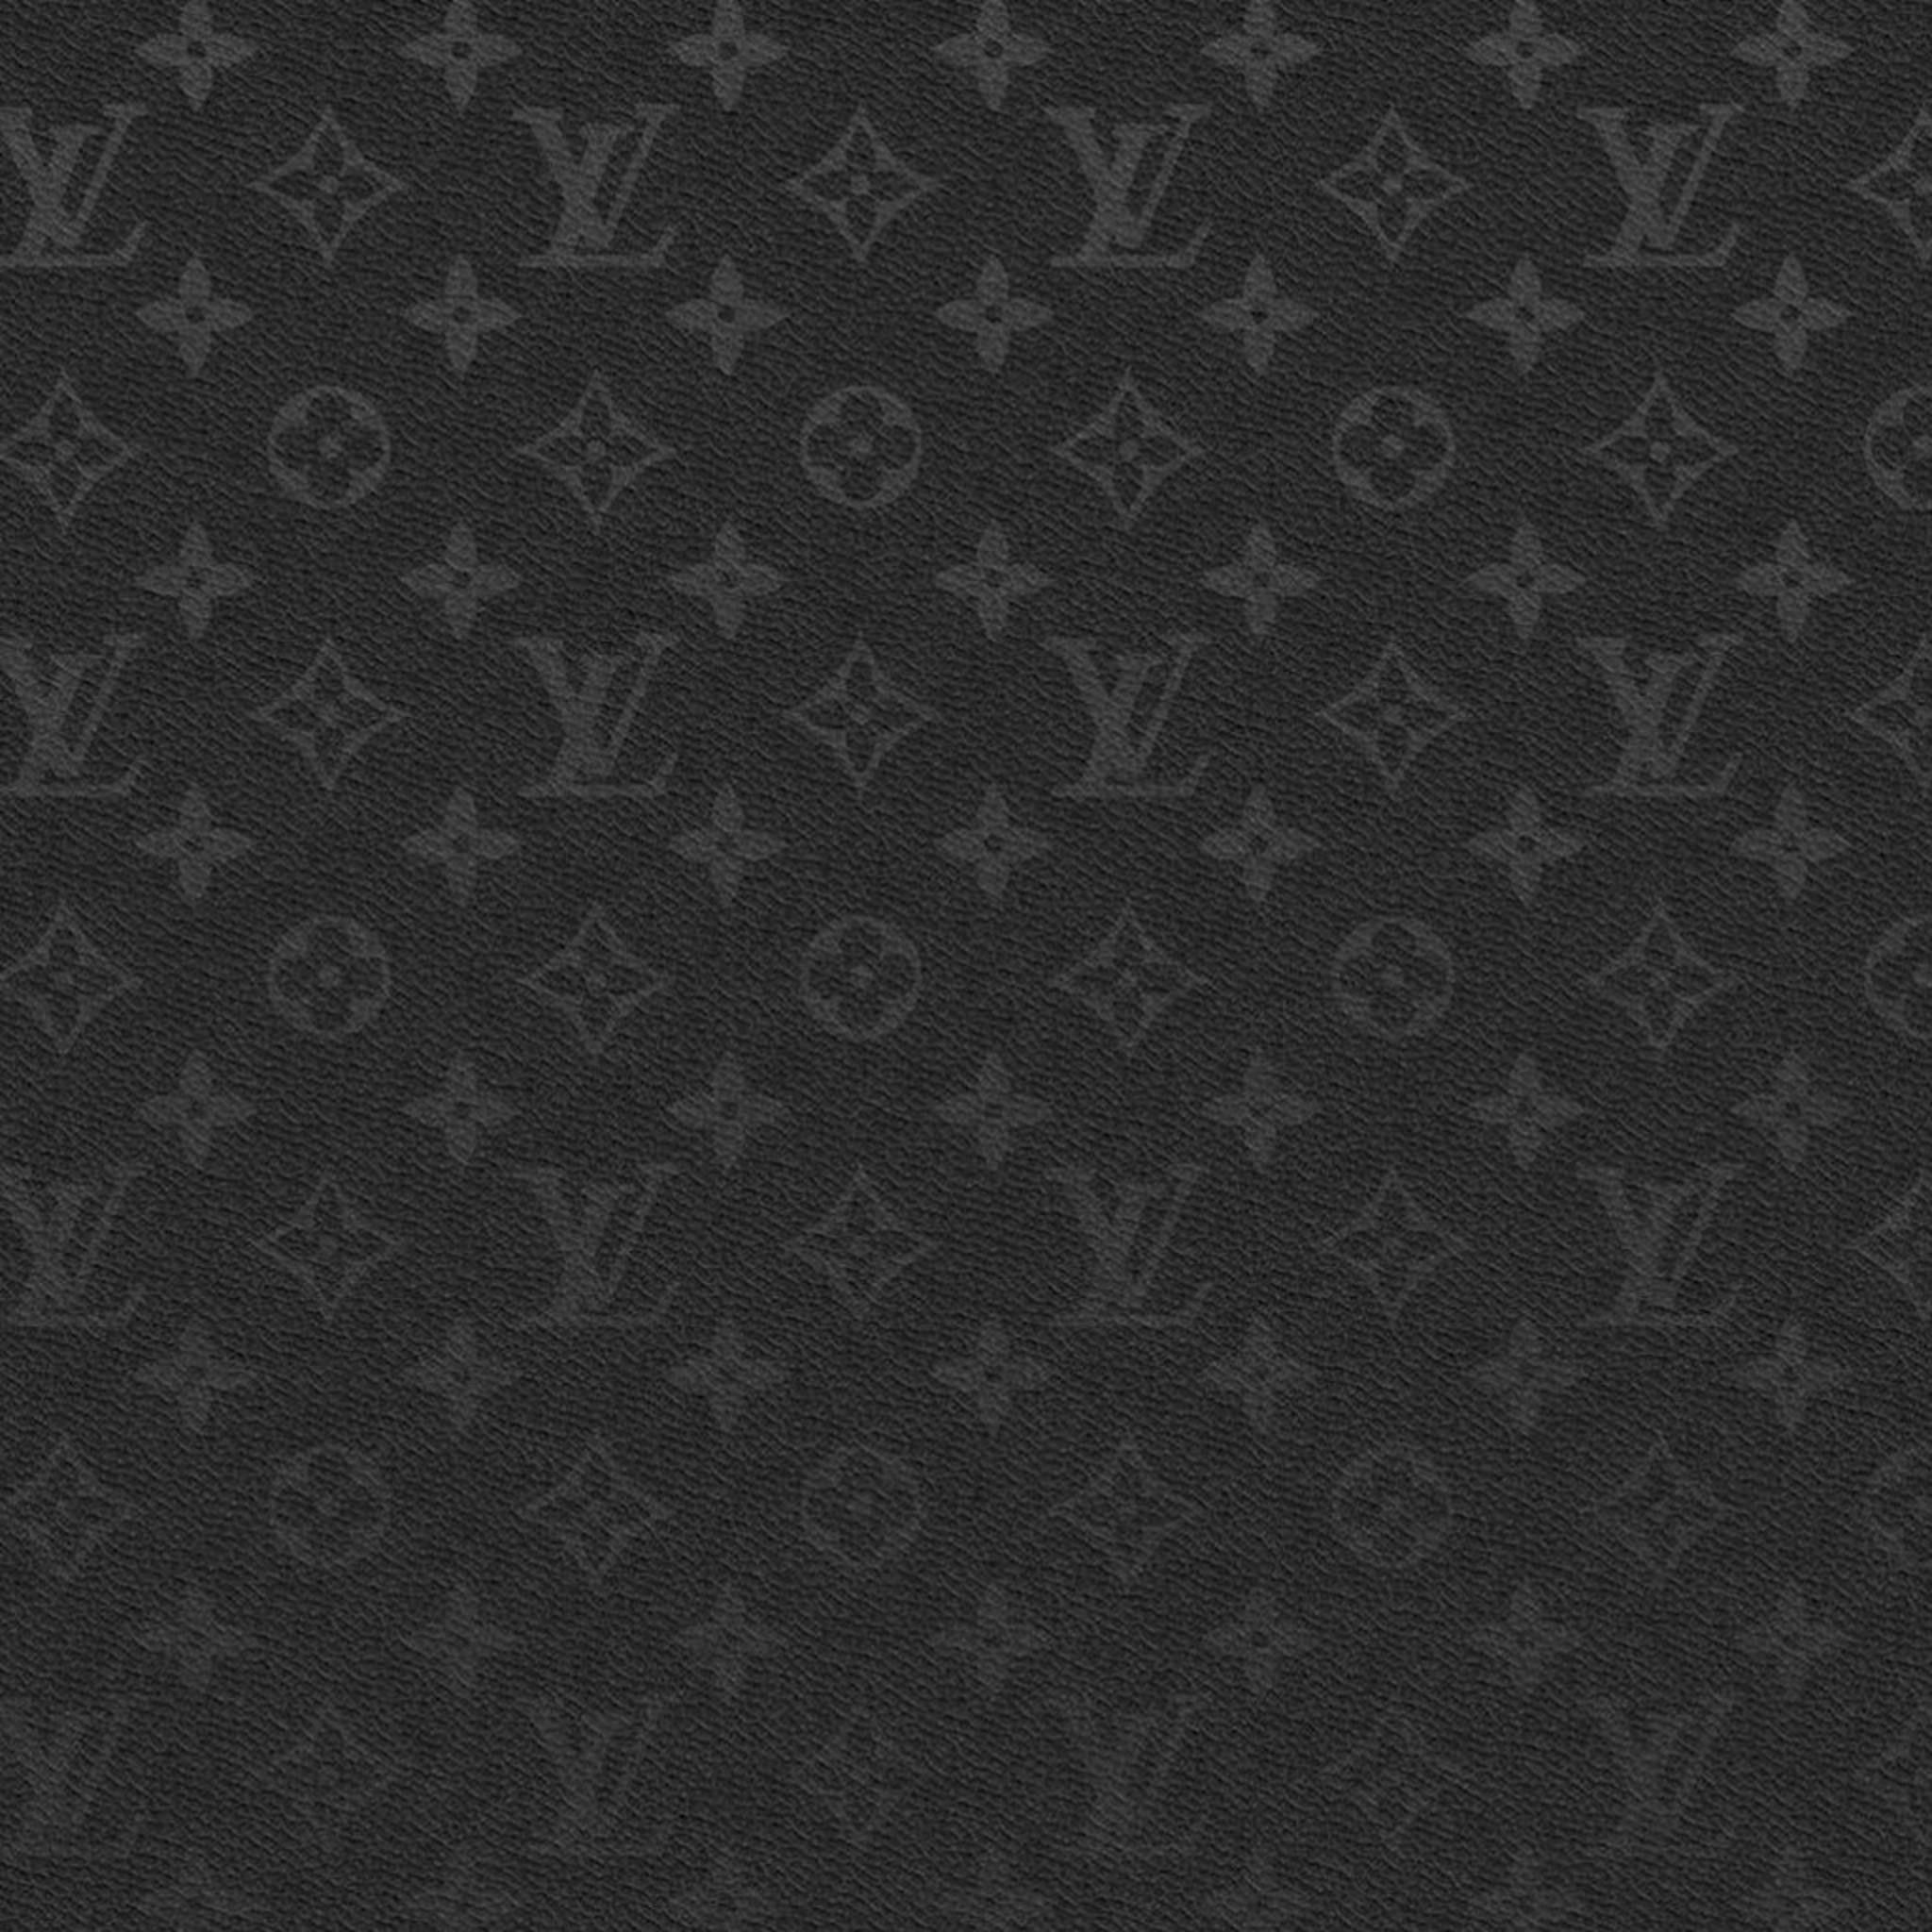 Black and White Louis Vuitton Monogram - Luxurydotcom - iTunes app photo  Louis  vuitton iphone wallpaper, White louis vuitton, Black and white posters